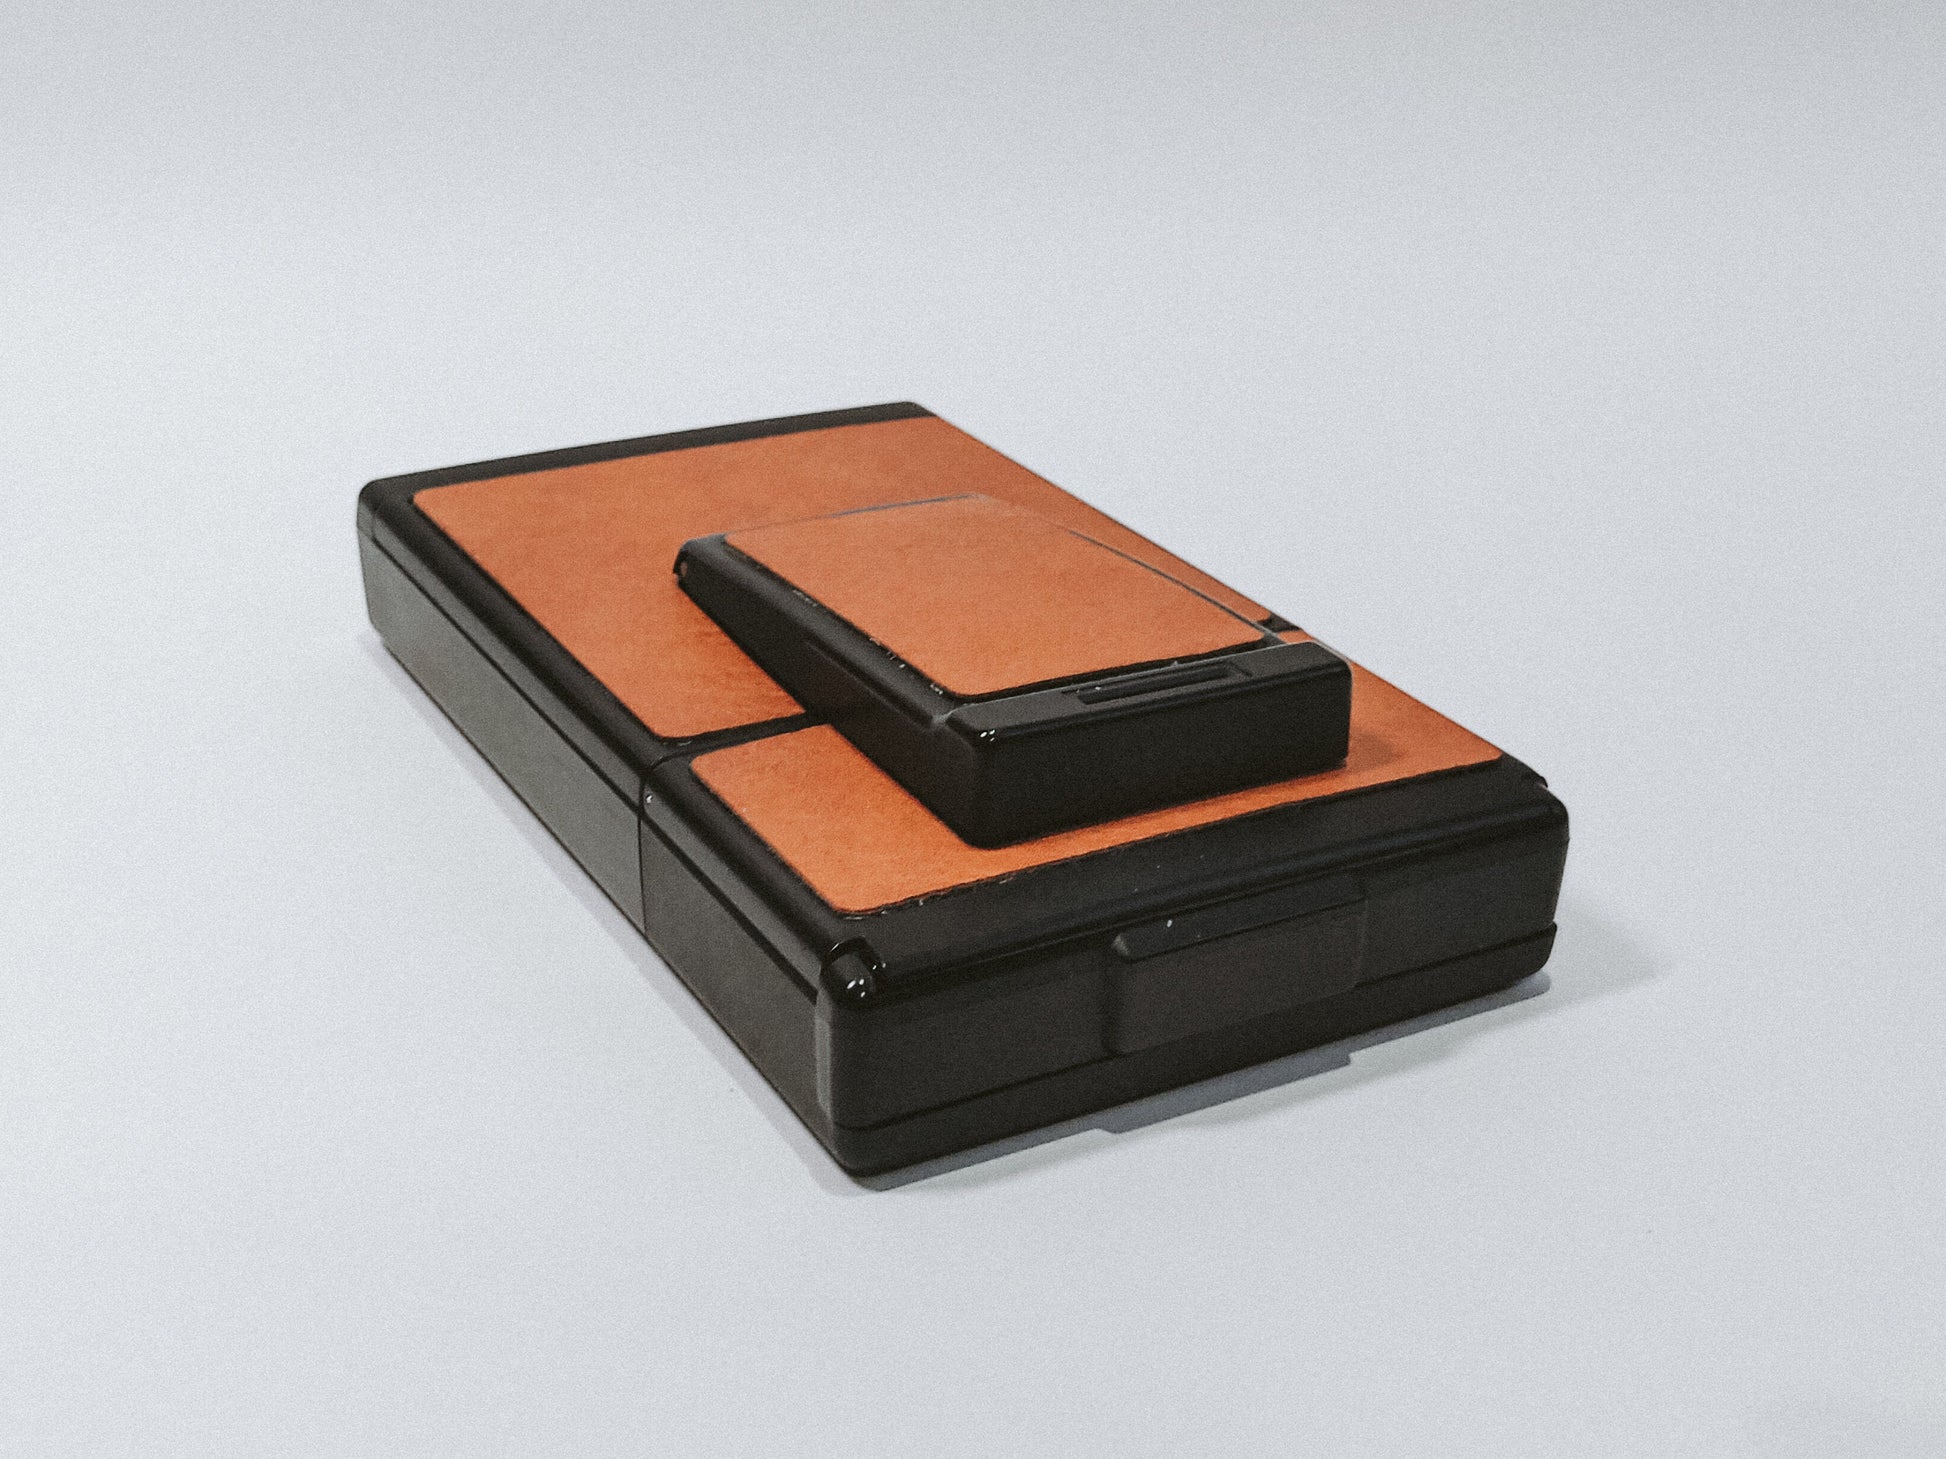 Vintage Polaroid SX-70 Instant Film Camera Model 3 fully Black body - Brown leather - Vintage Polaroid Instant Cameras